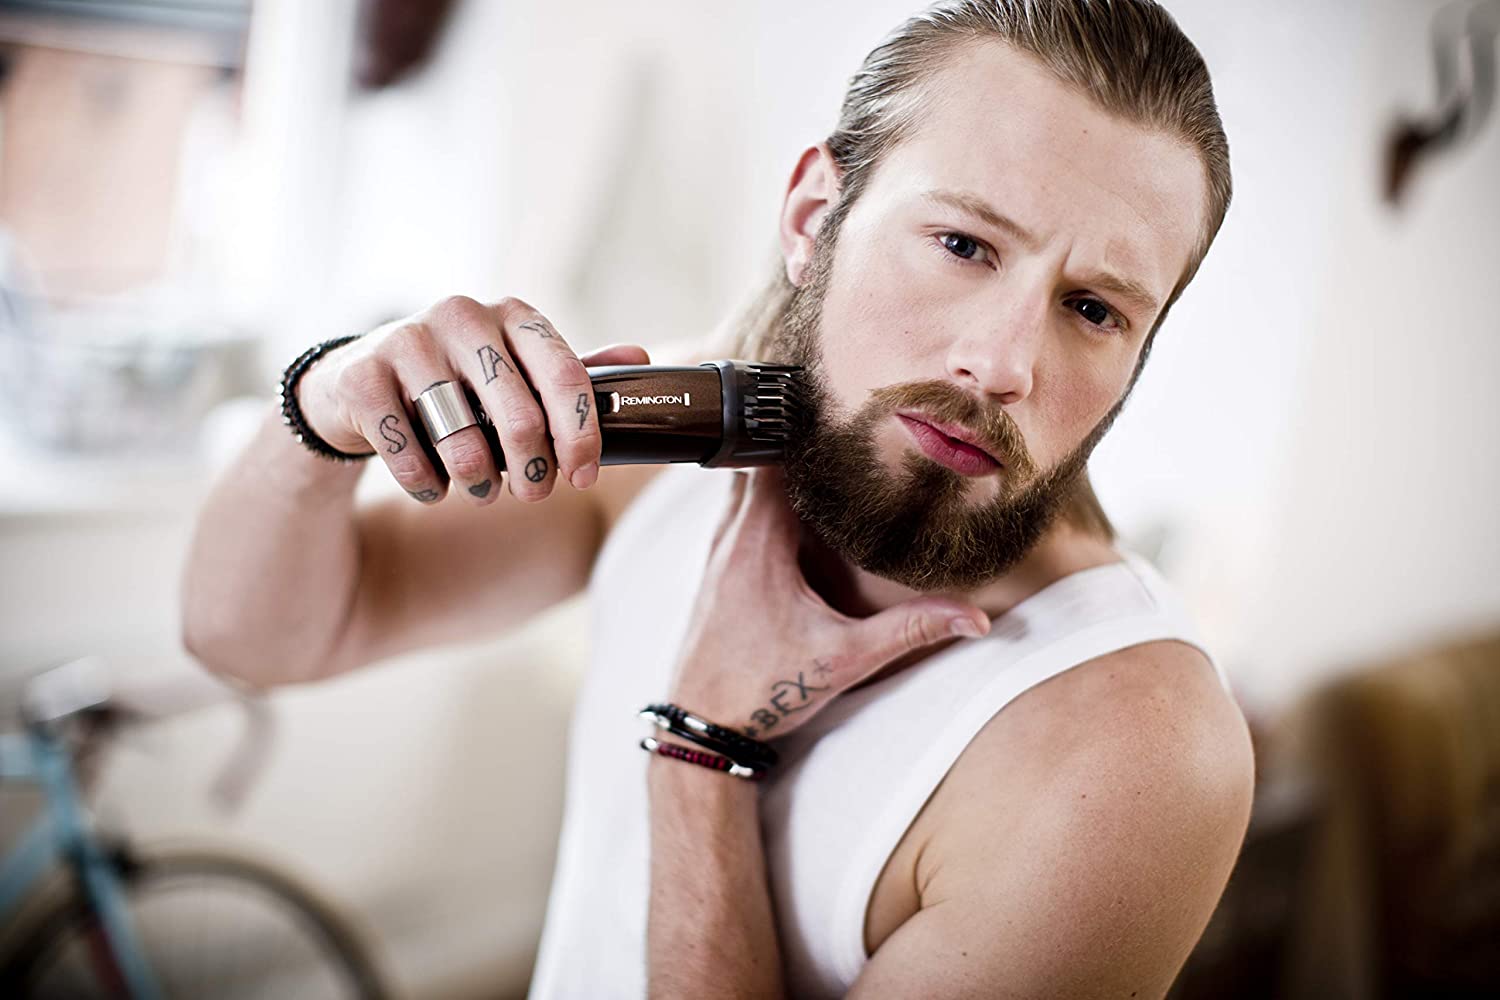 Remington beard trimmer men set (incl. XL comb for full beard), 3 attachment combs (stubble, short & XL comb), titanium coated self-sharpening blades, hair clipper, beard trimmer MB4046